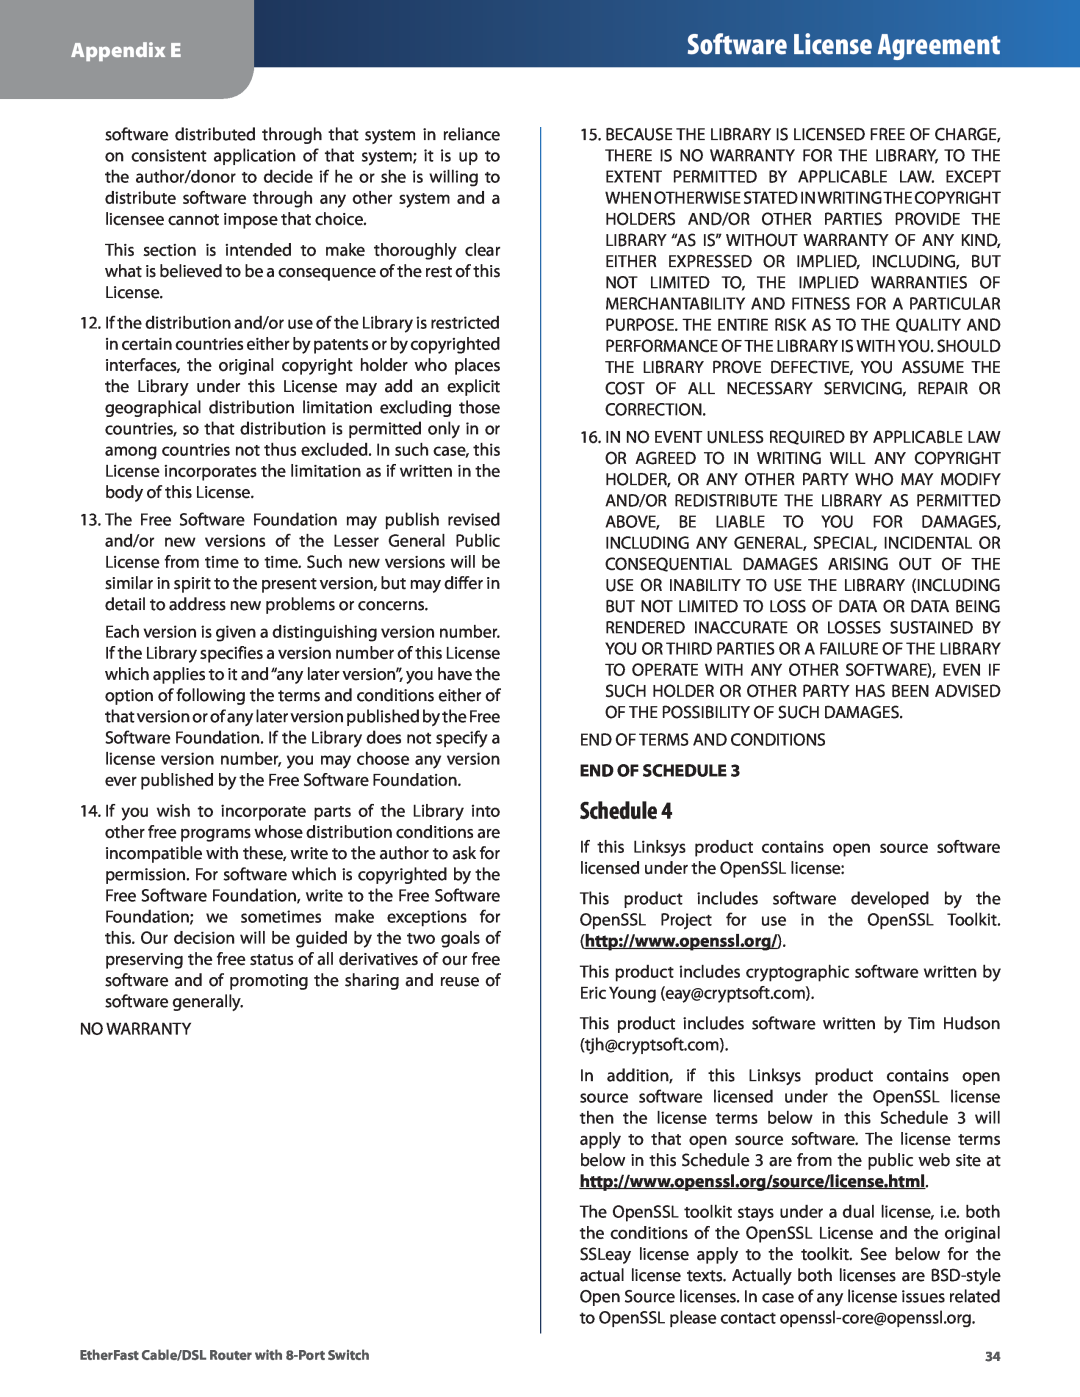 Cisco Systems BEFSR81 manual Software License Agreement, Schedule, Appendix E 